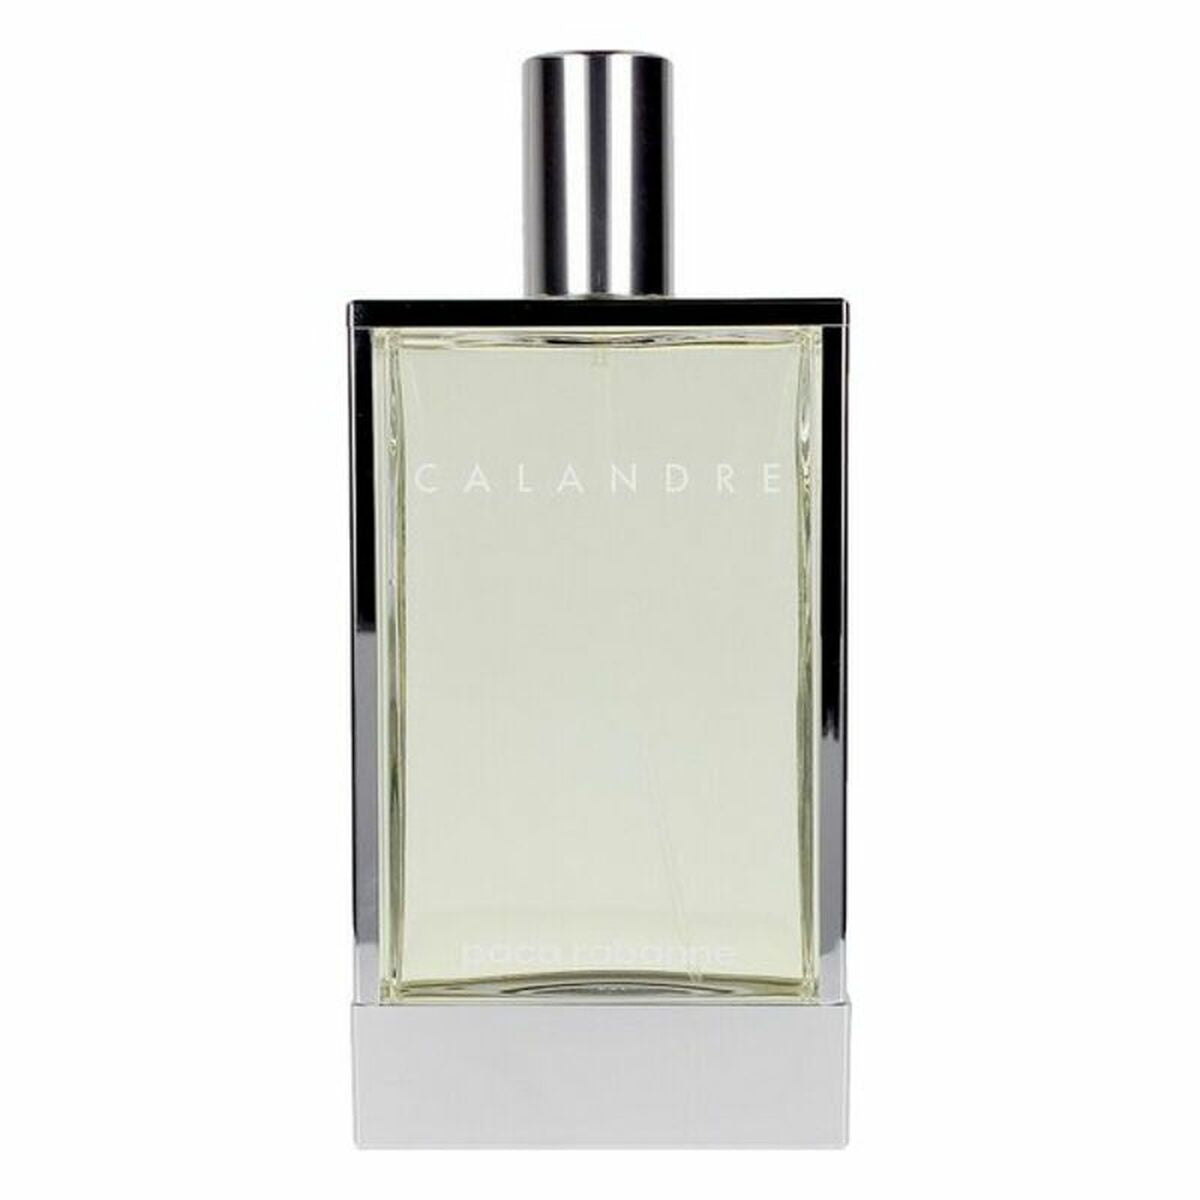 Perfume Mujer Calandre Paco Rabanne EDT Calandre 100 ml